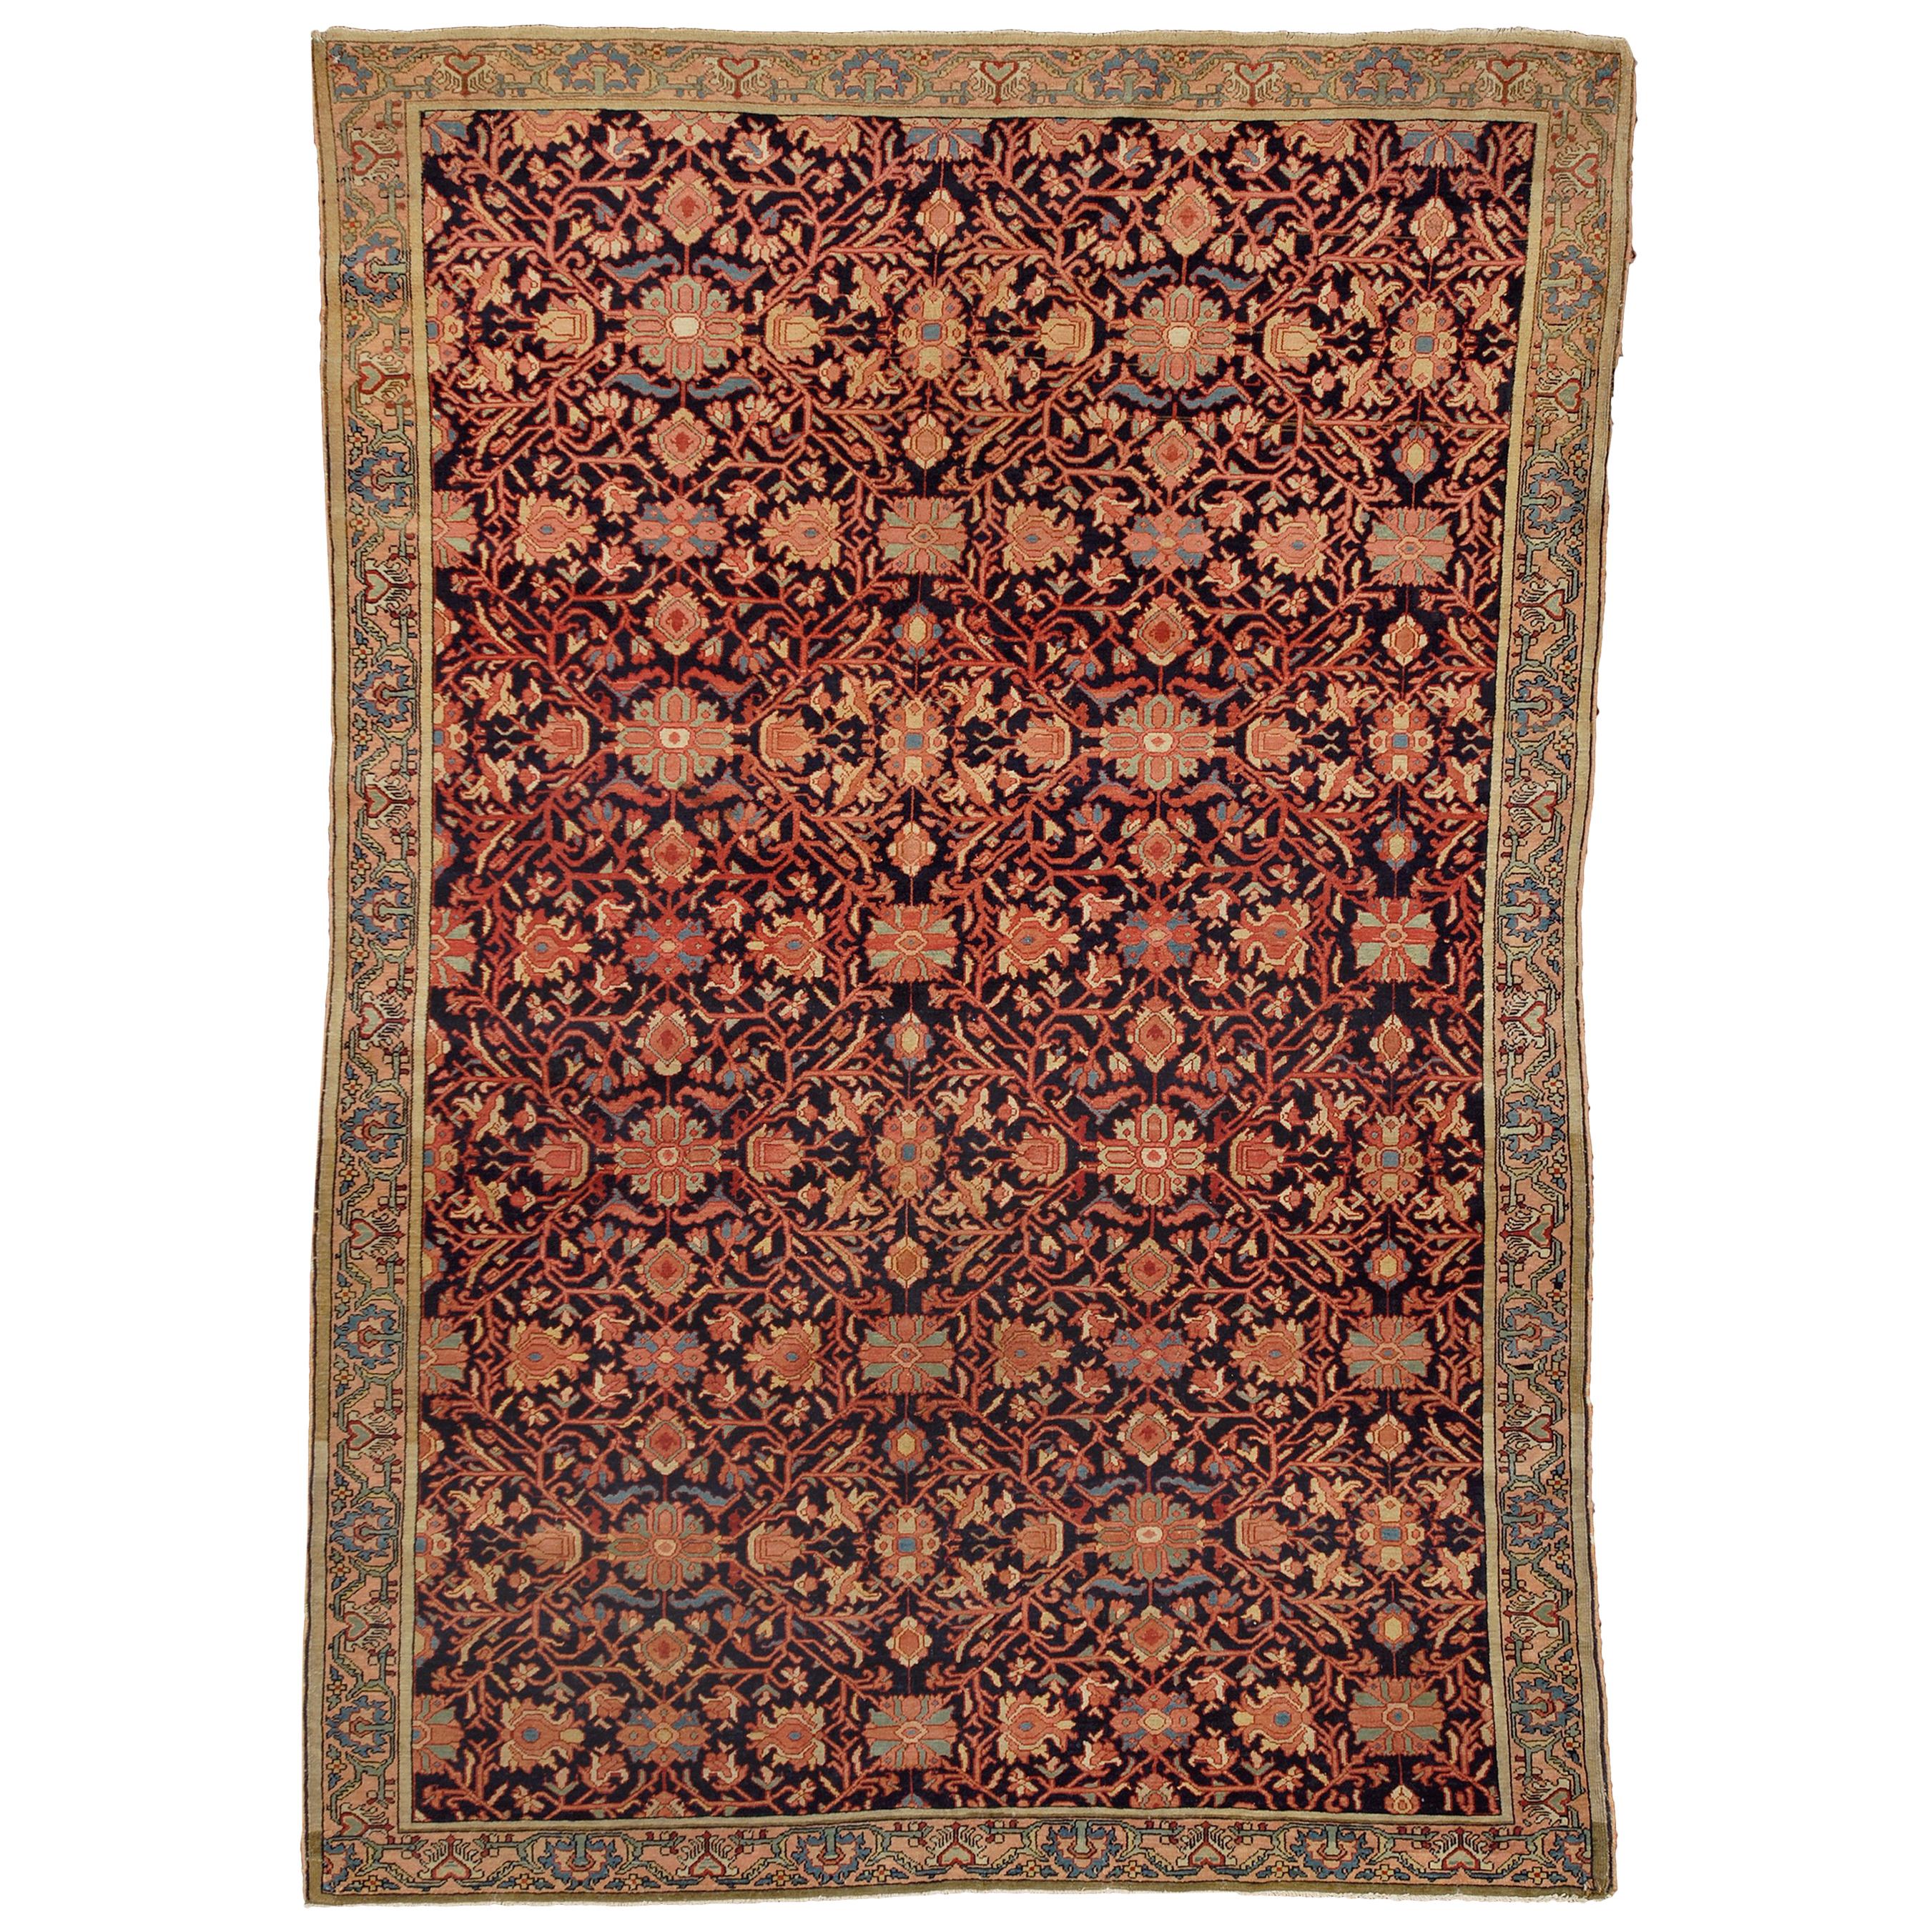 Antique Persian Malayer Rug